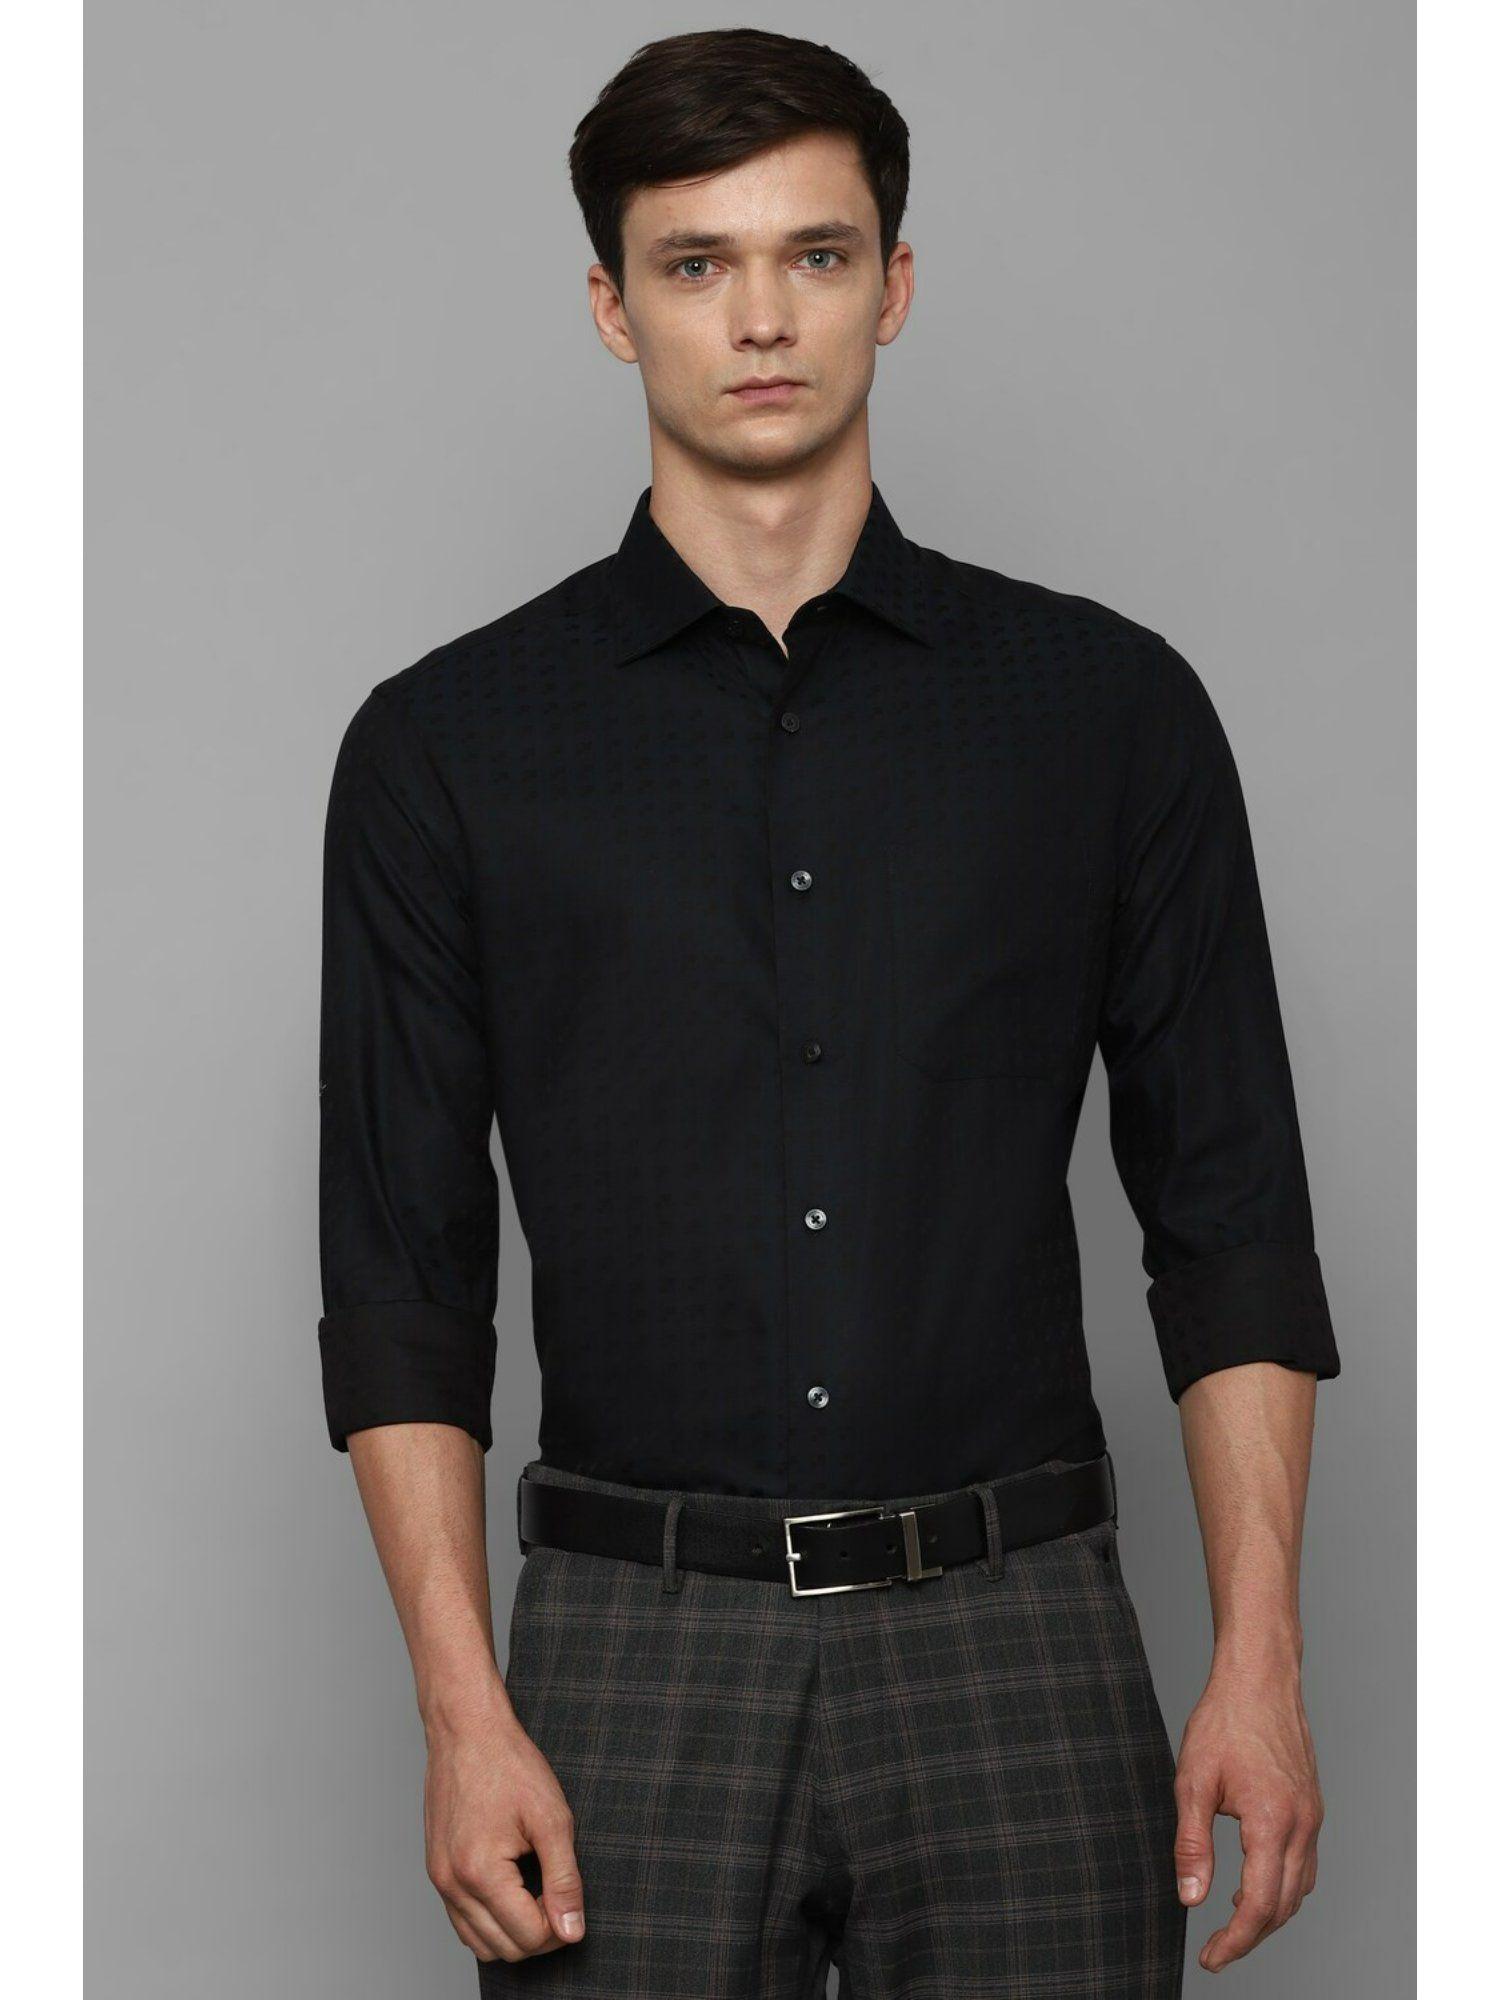 men-black-classic-fit-textured-full-sleeves-formal-shirt